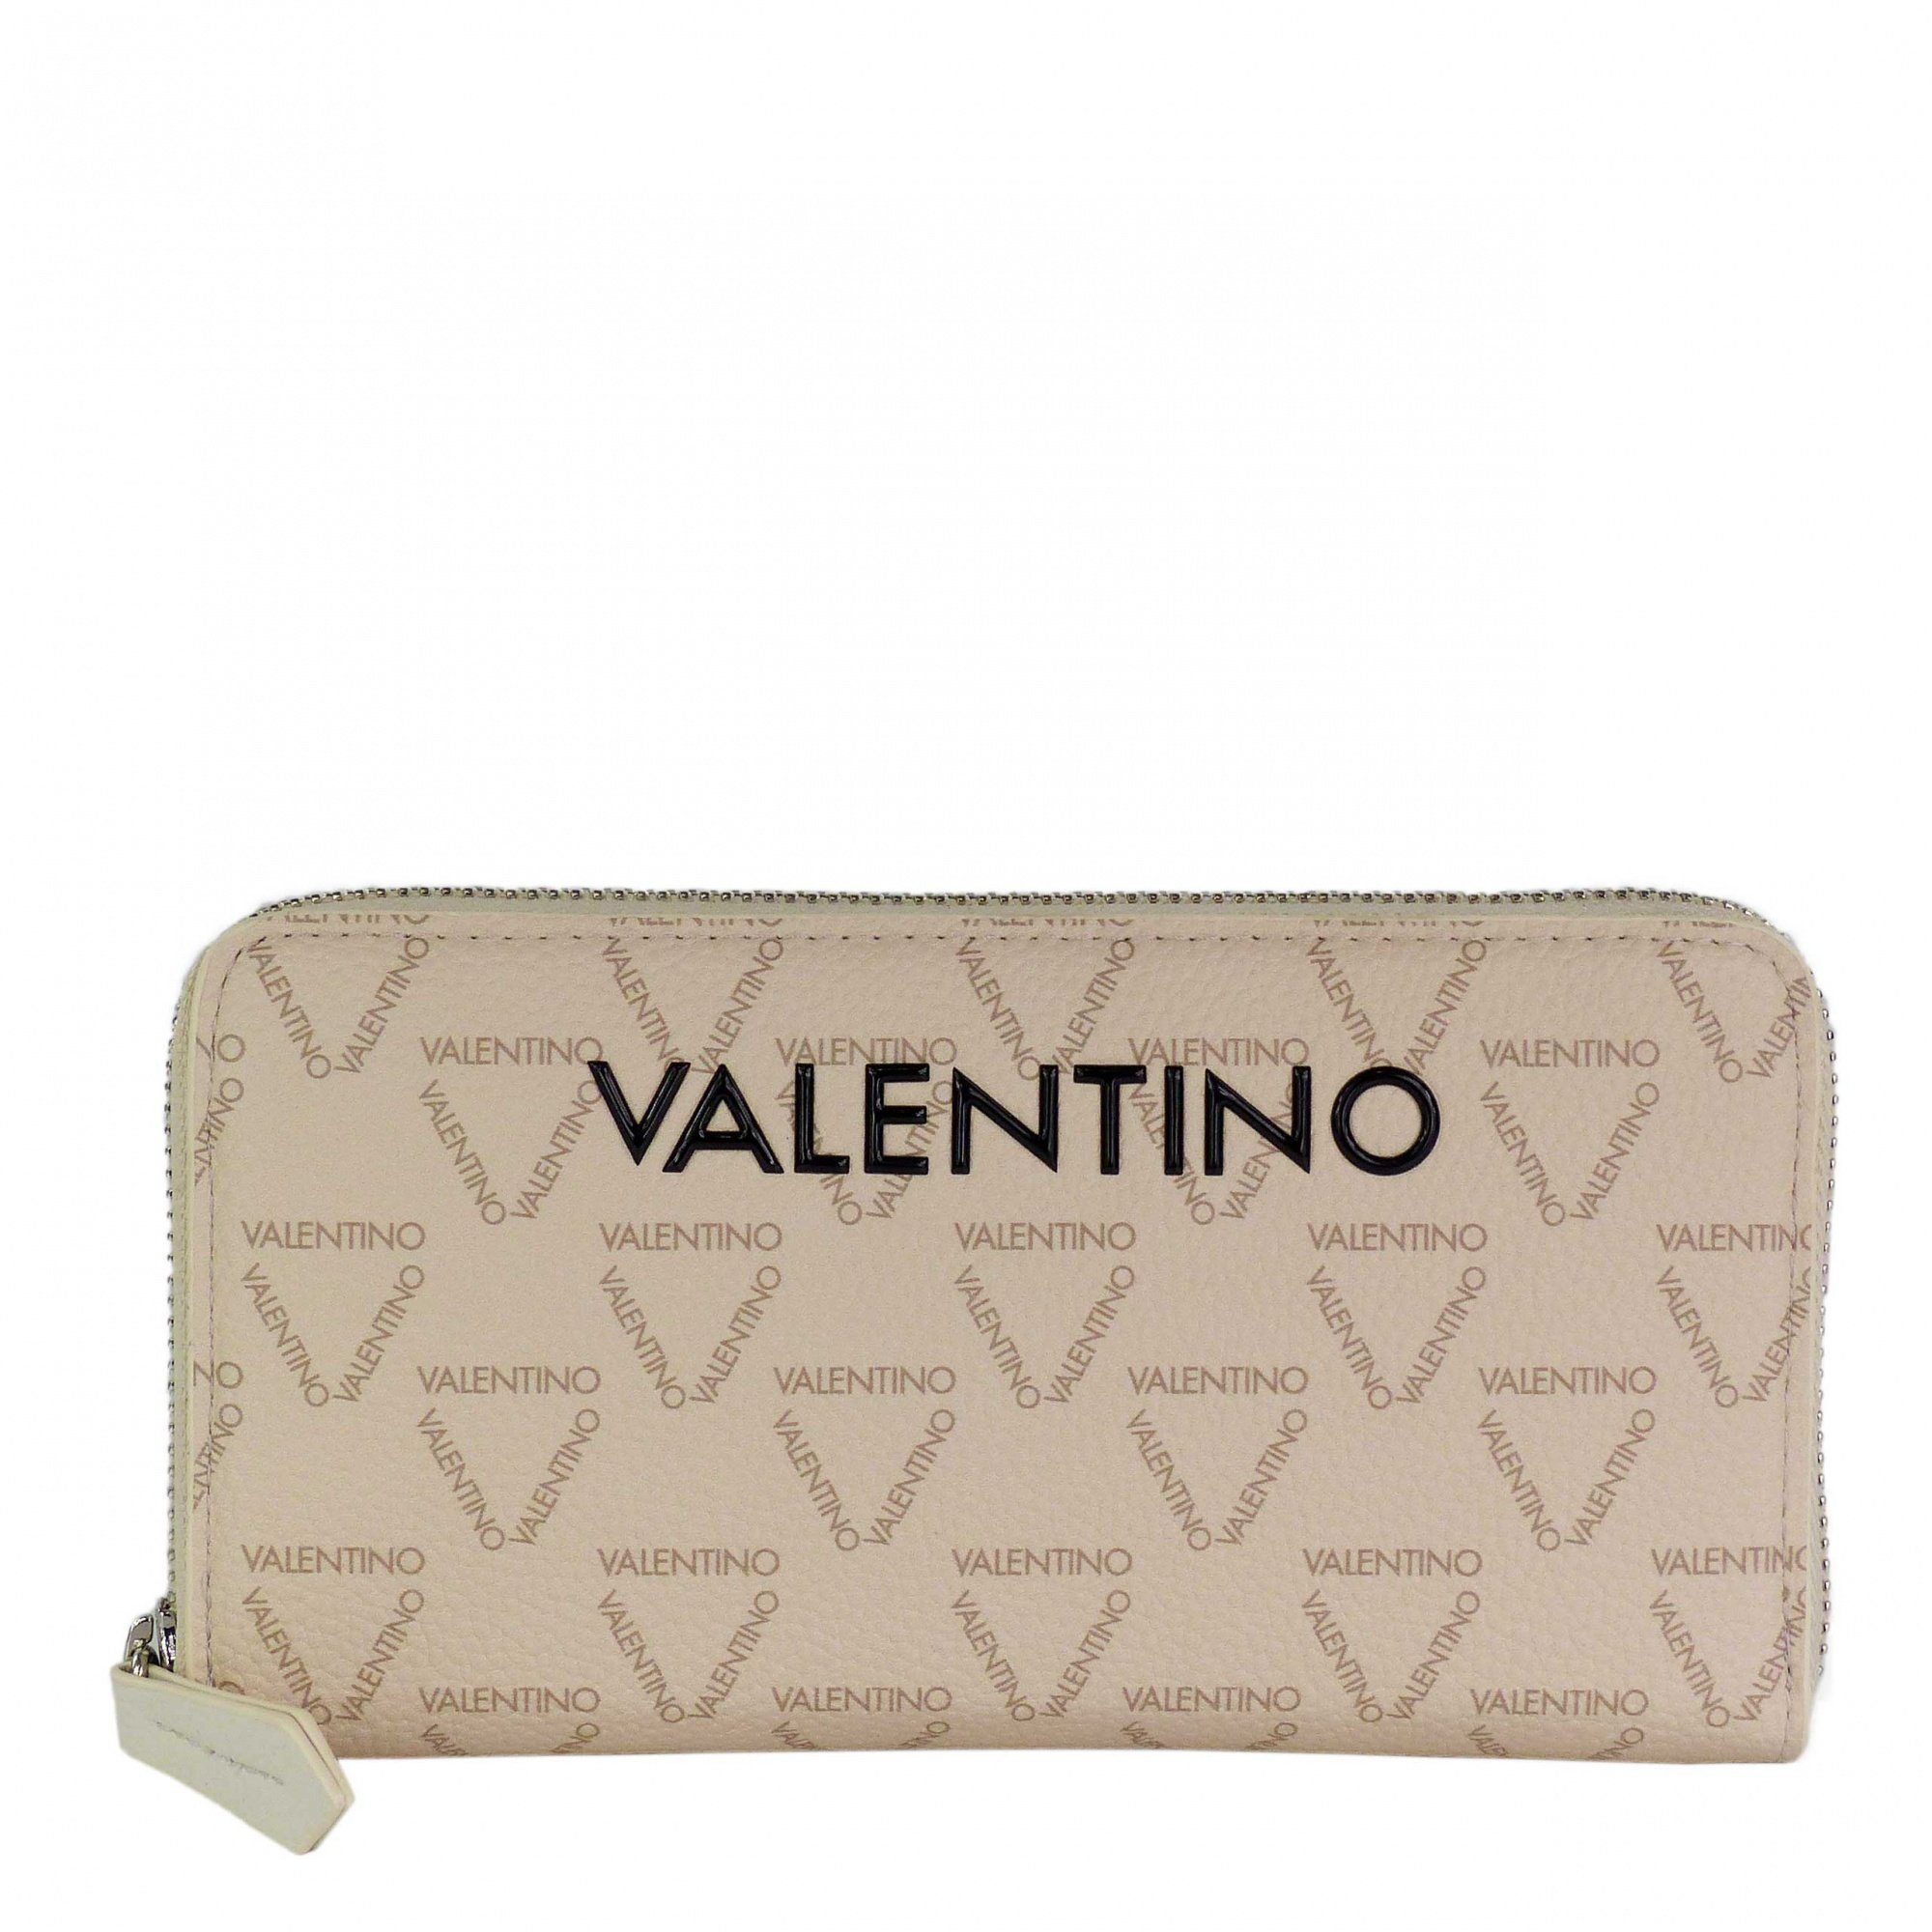 VALENTINO BAGS Geldbörse Jelly Wallet VPS6SW155 Cream White / Multi